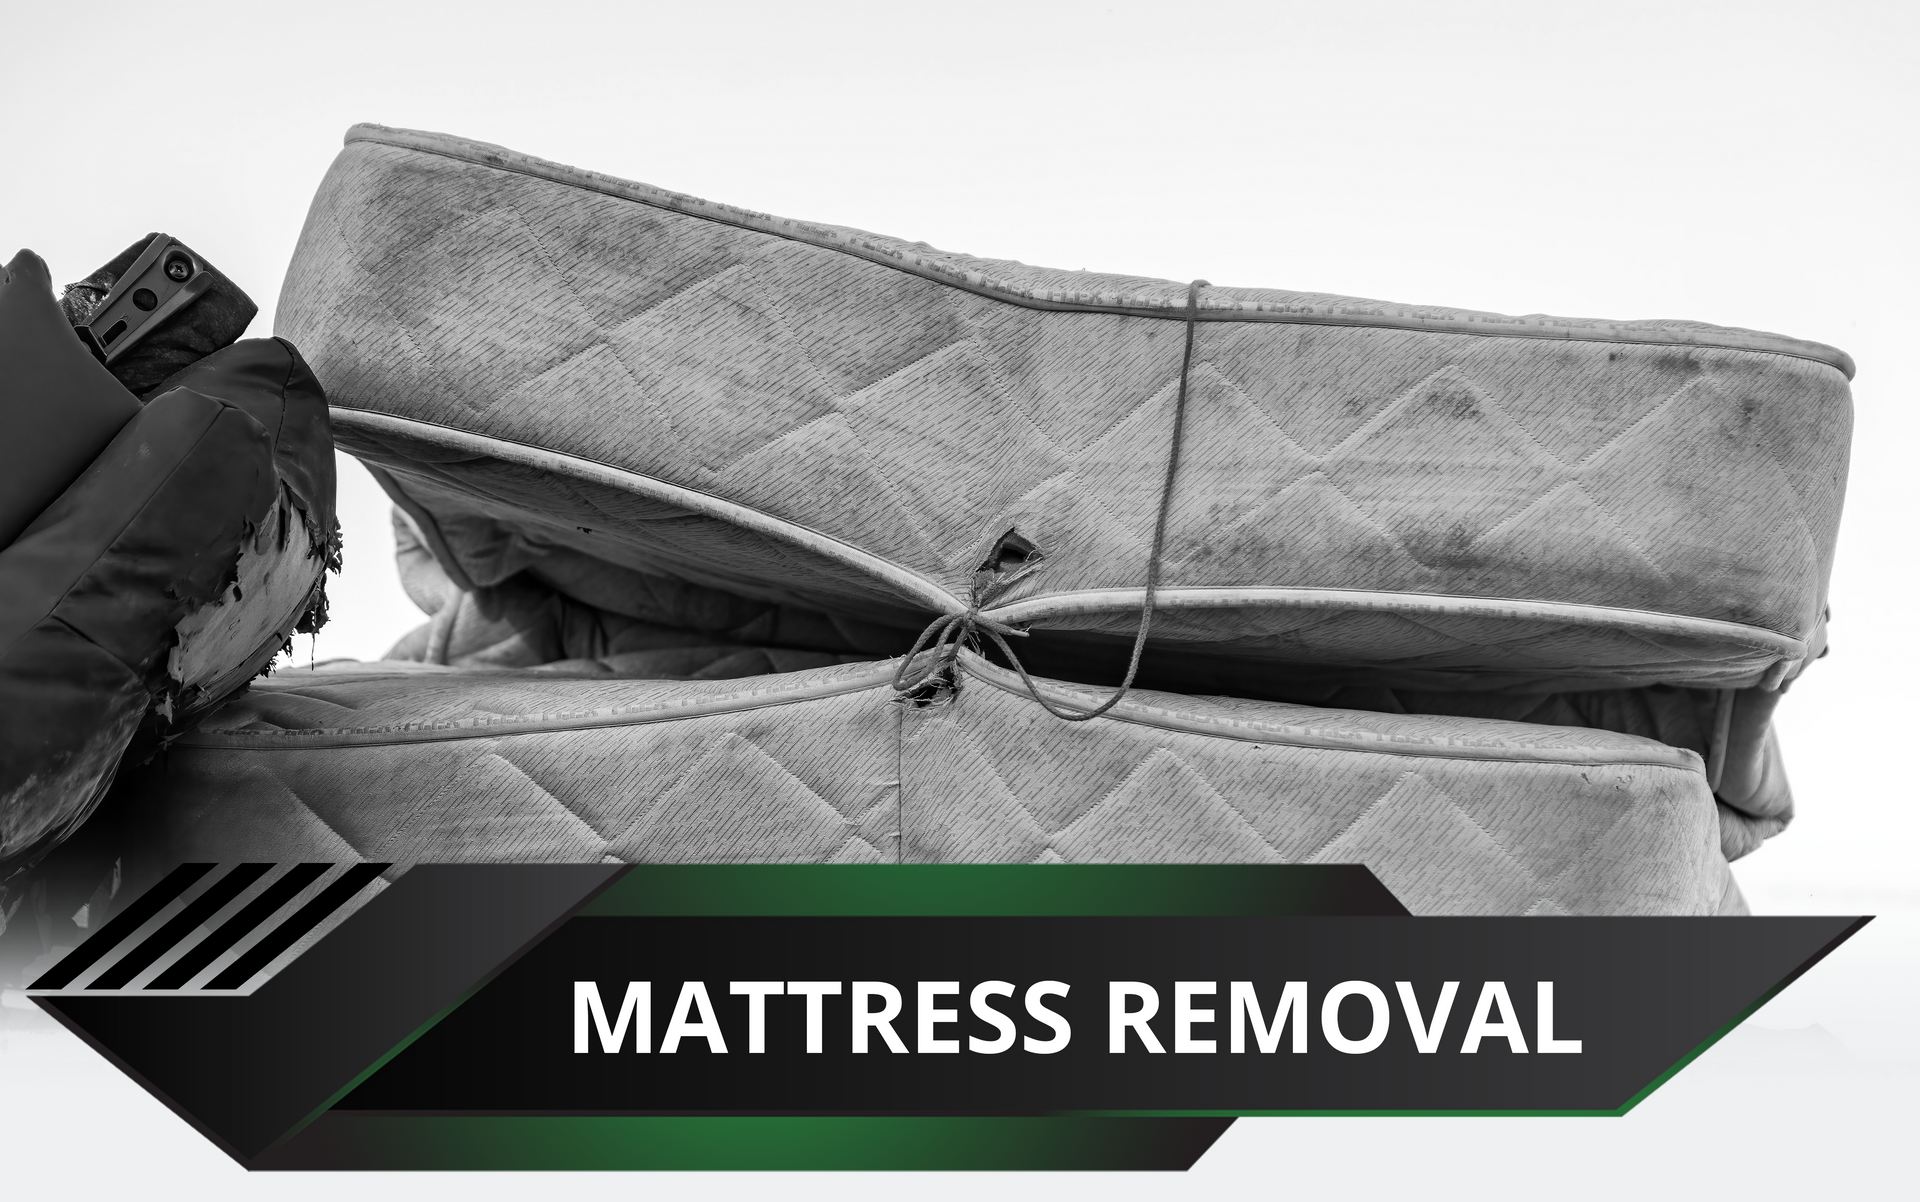 Mattress Removal in Kingsburg, CA